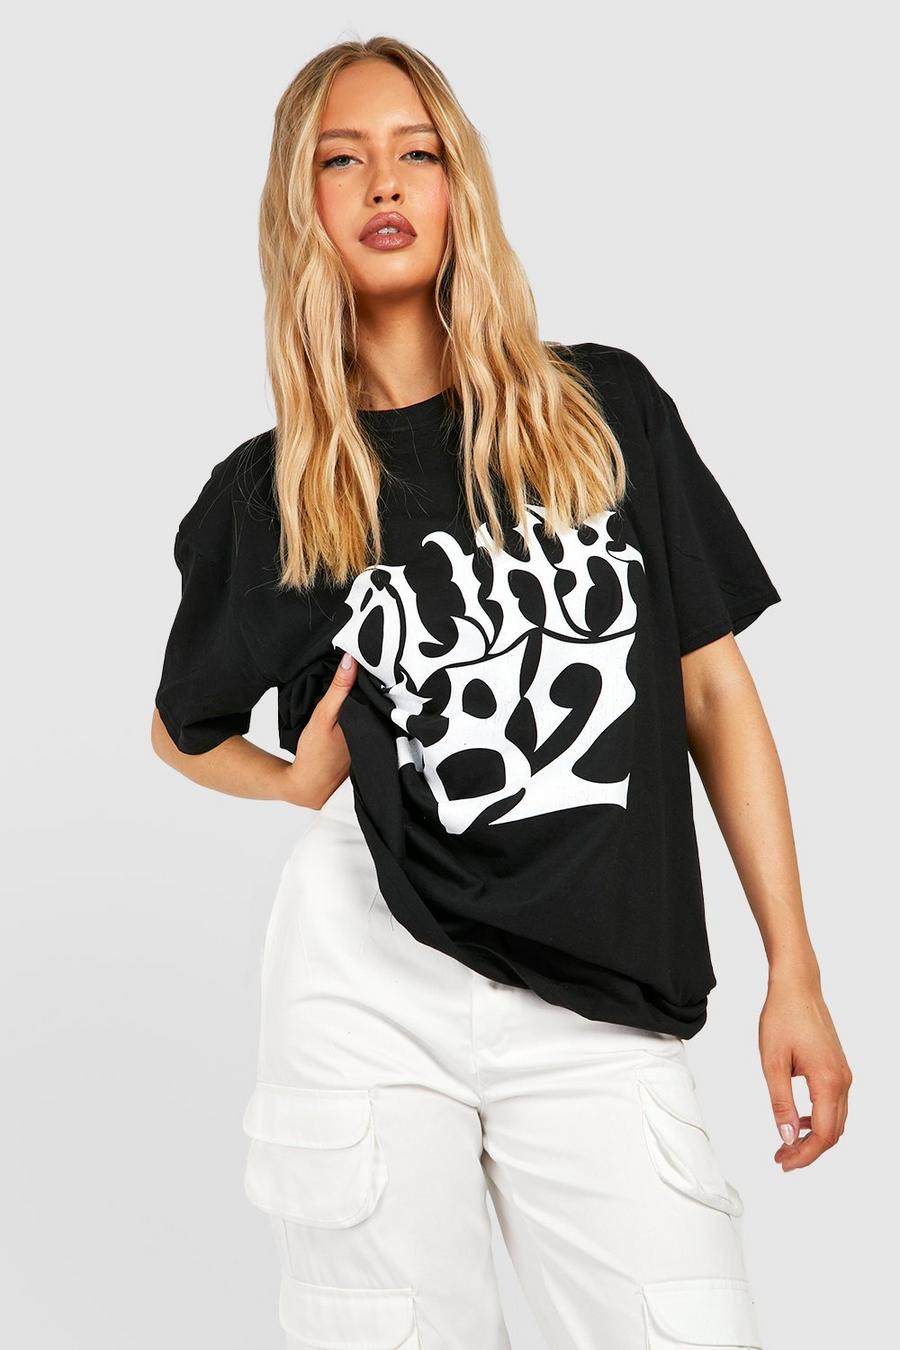 Black Tall Oversized Blink 182 License T-Shirt image number 1